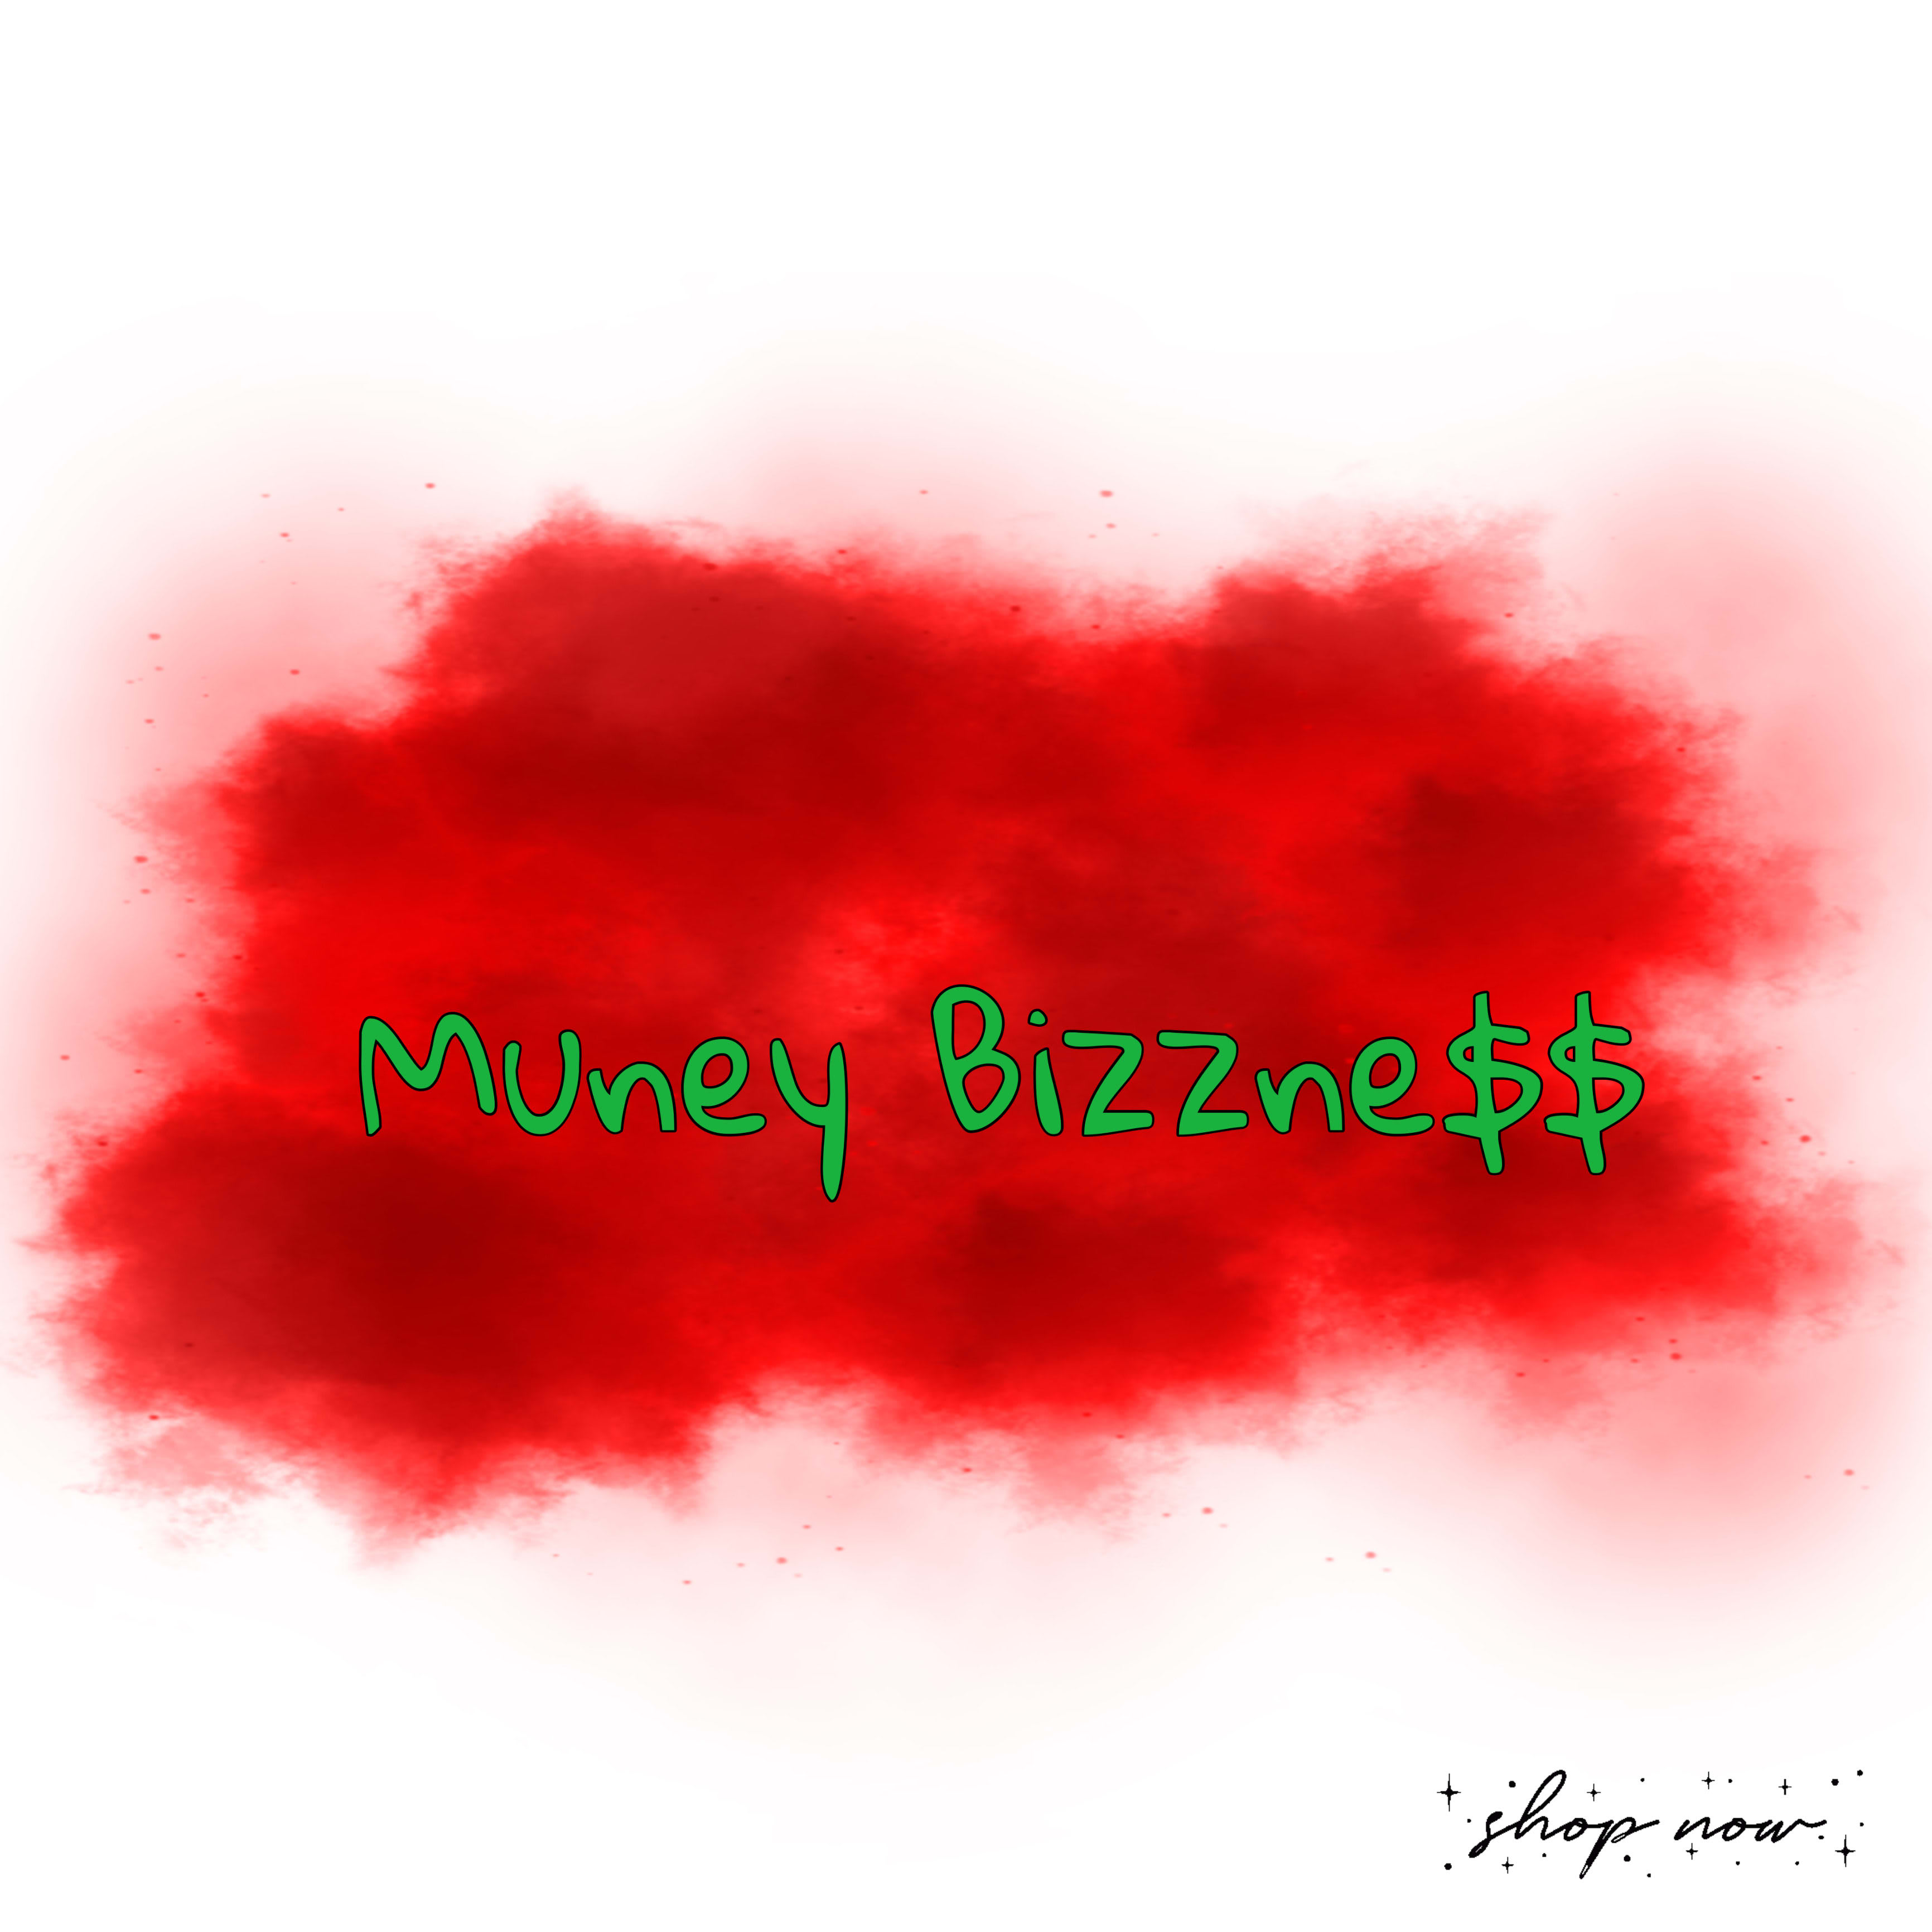 Muney Bizzness